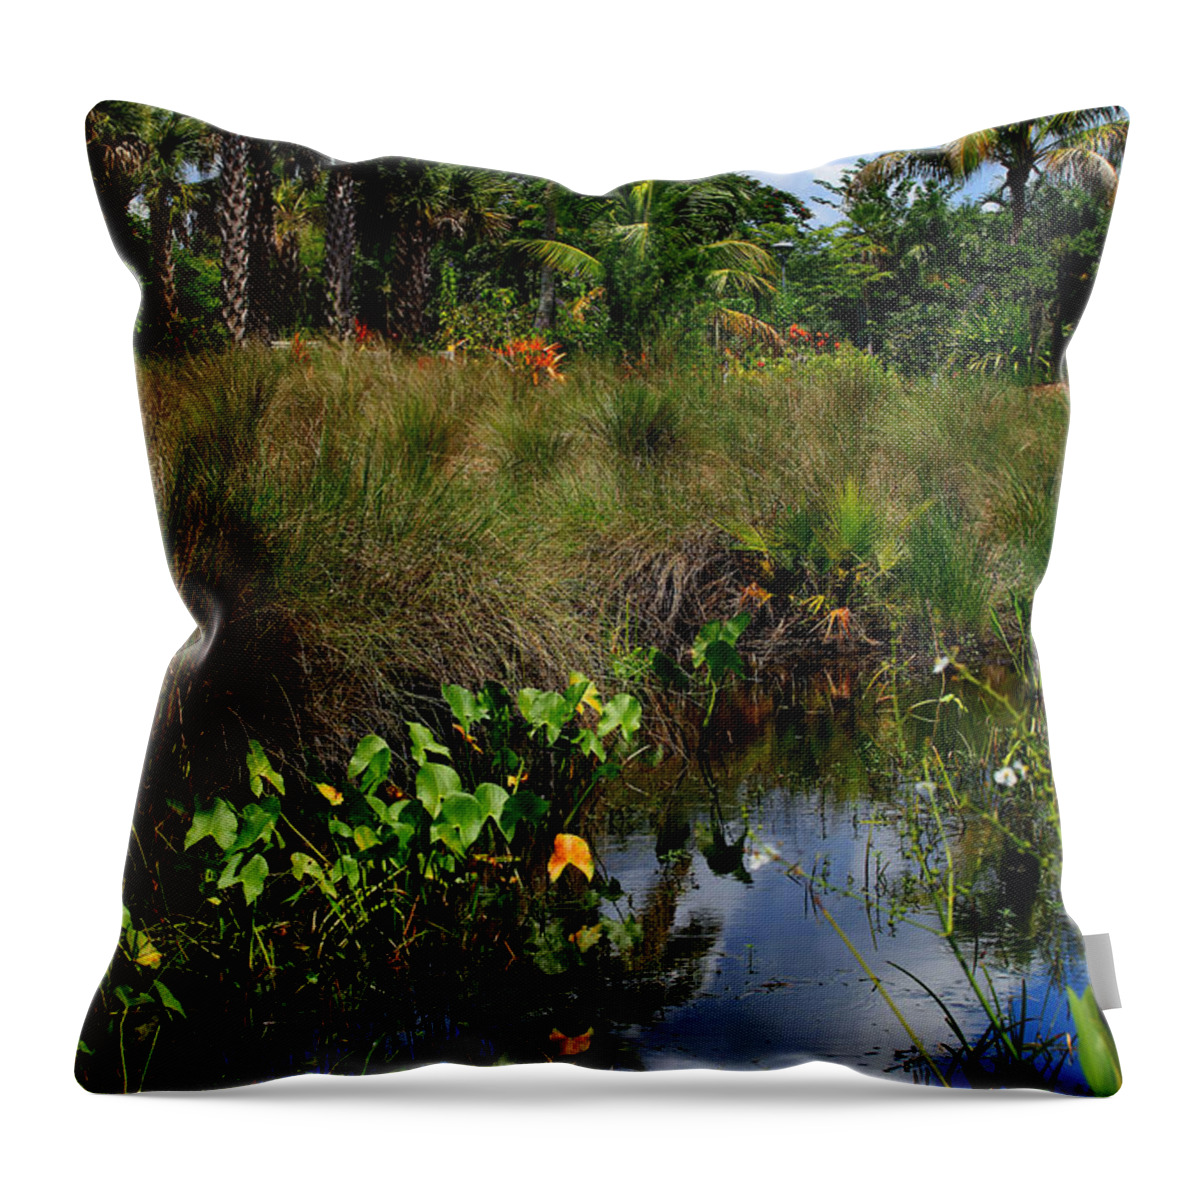 Lagoon Throw Pillow featuring the photograph Florida Lagoon by Joseph G Holland